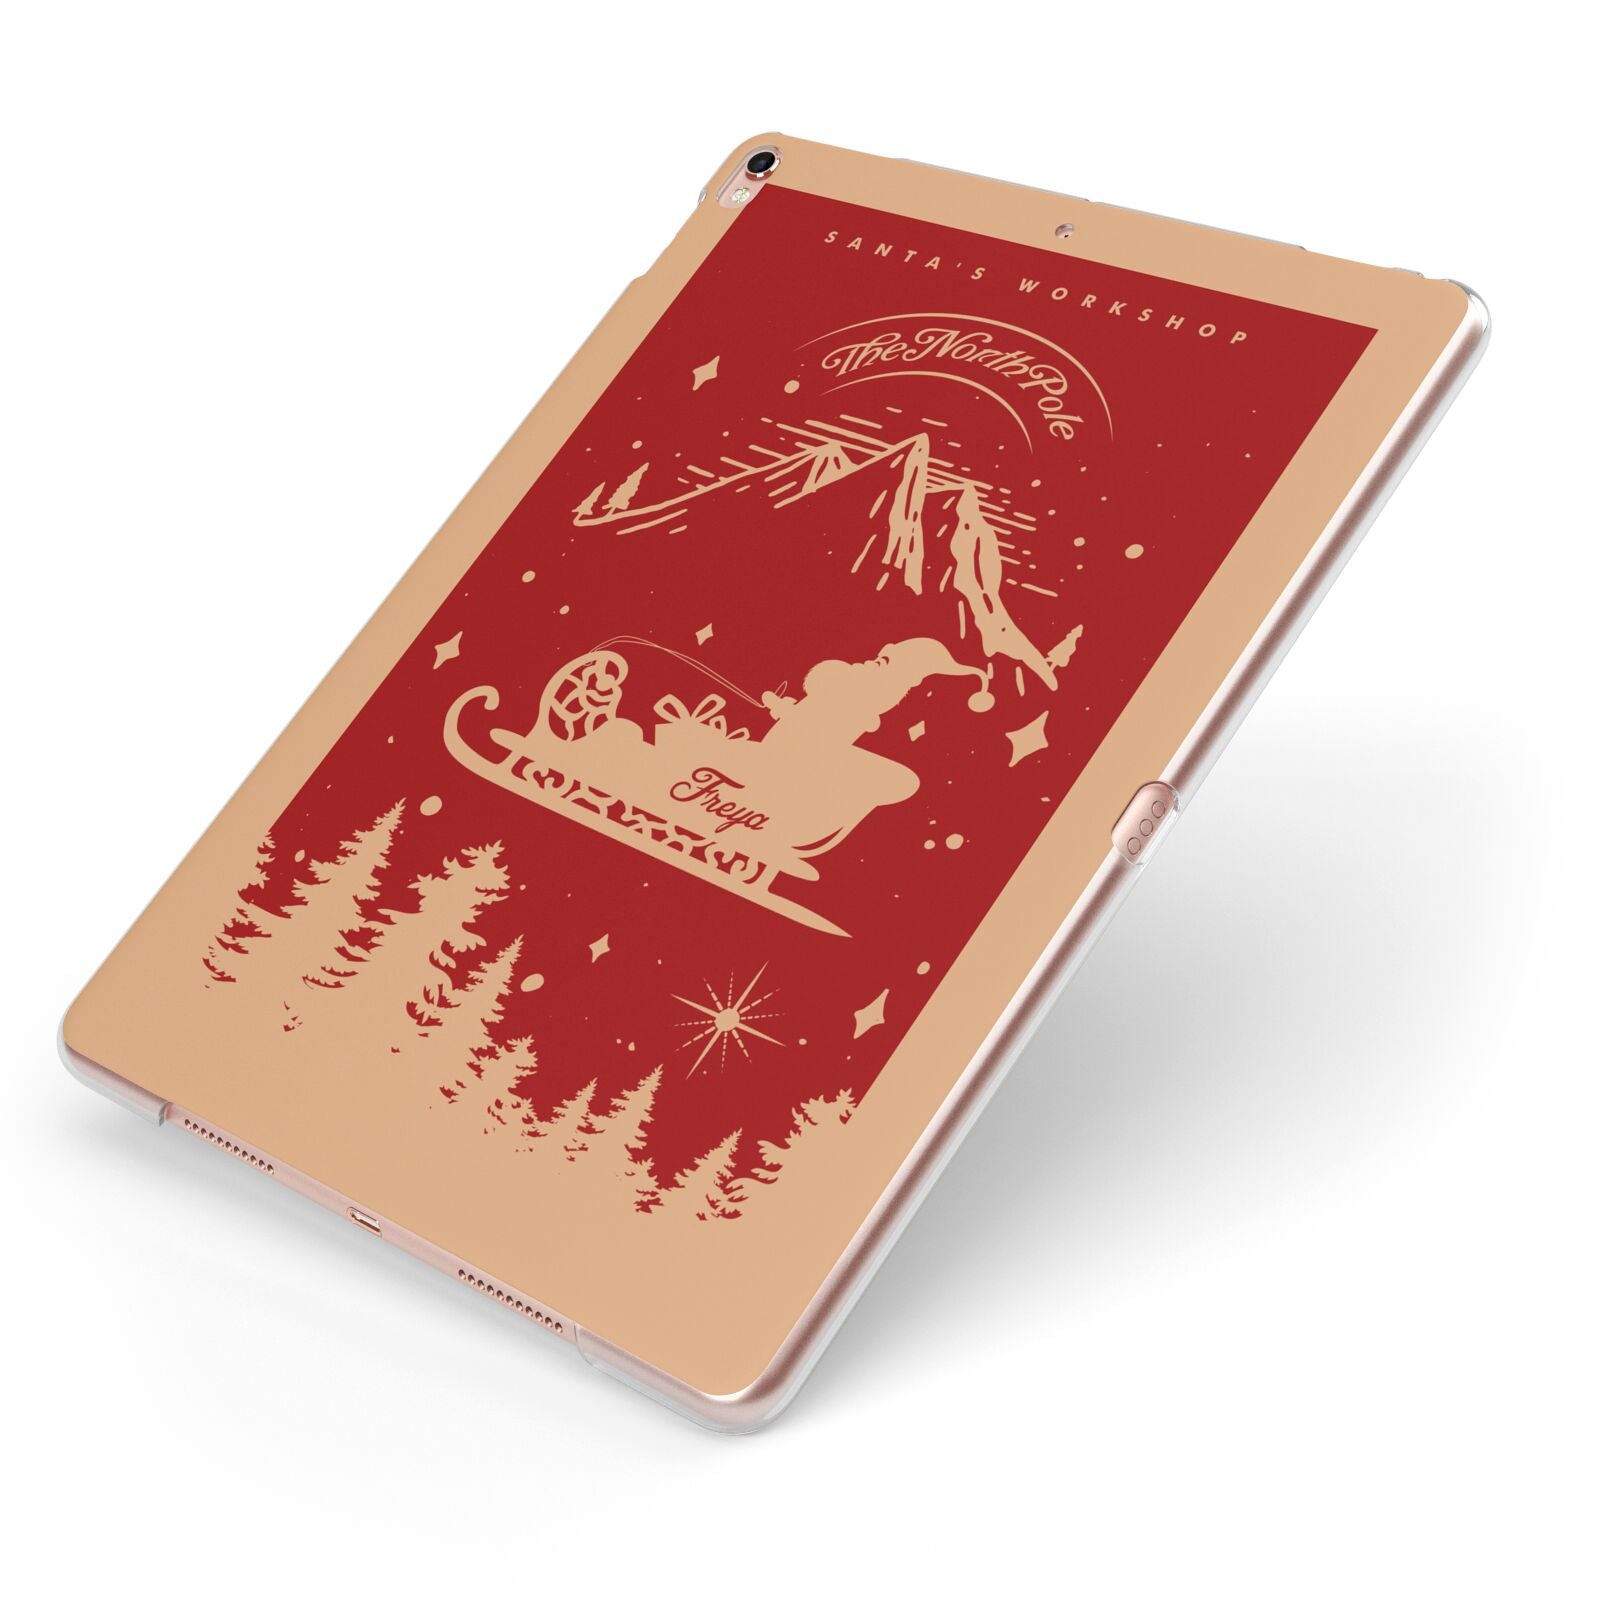 Santas Workshop Personalised Apple iPad Case on Rose Gold iPad Side View